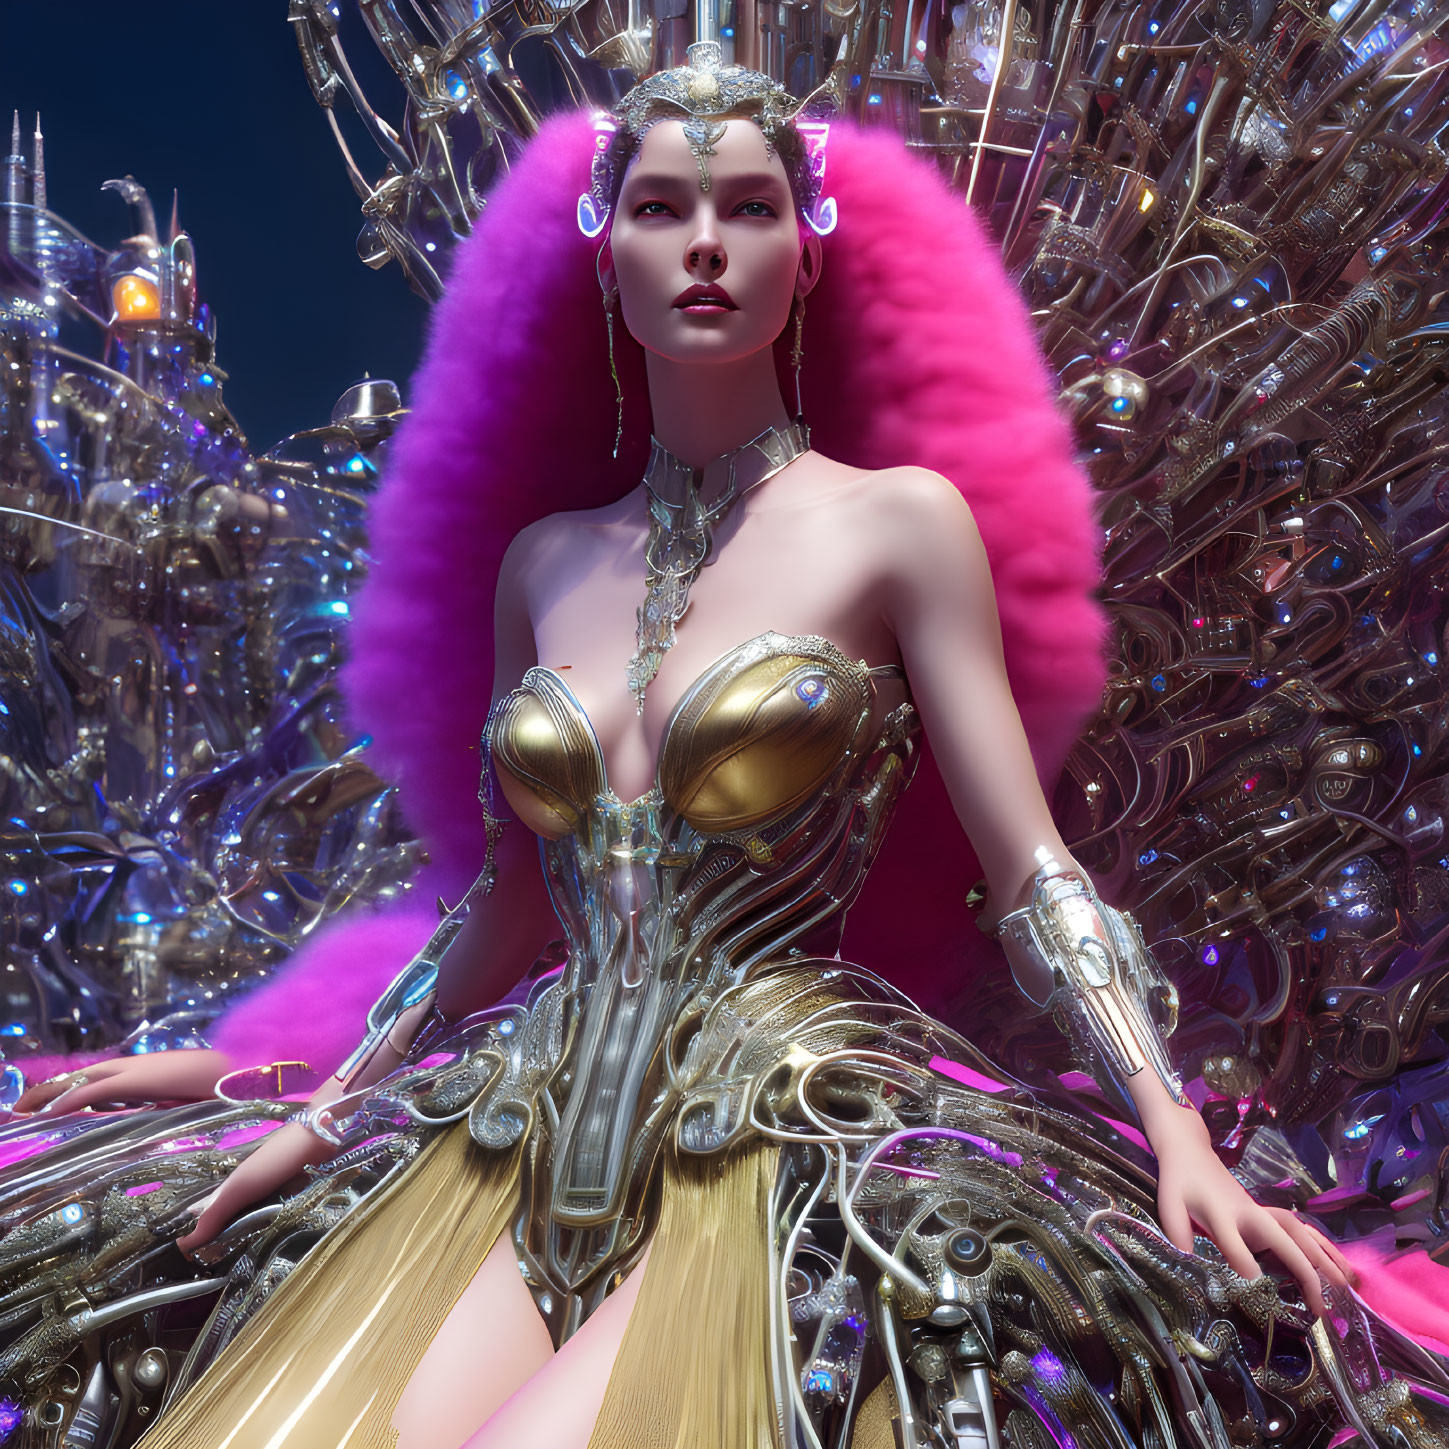 Futuristic cybernetic woman in elaborate metallic attire against sci-fi backdrop